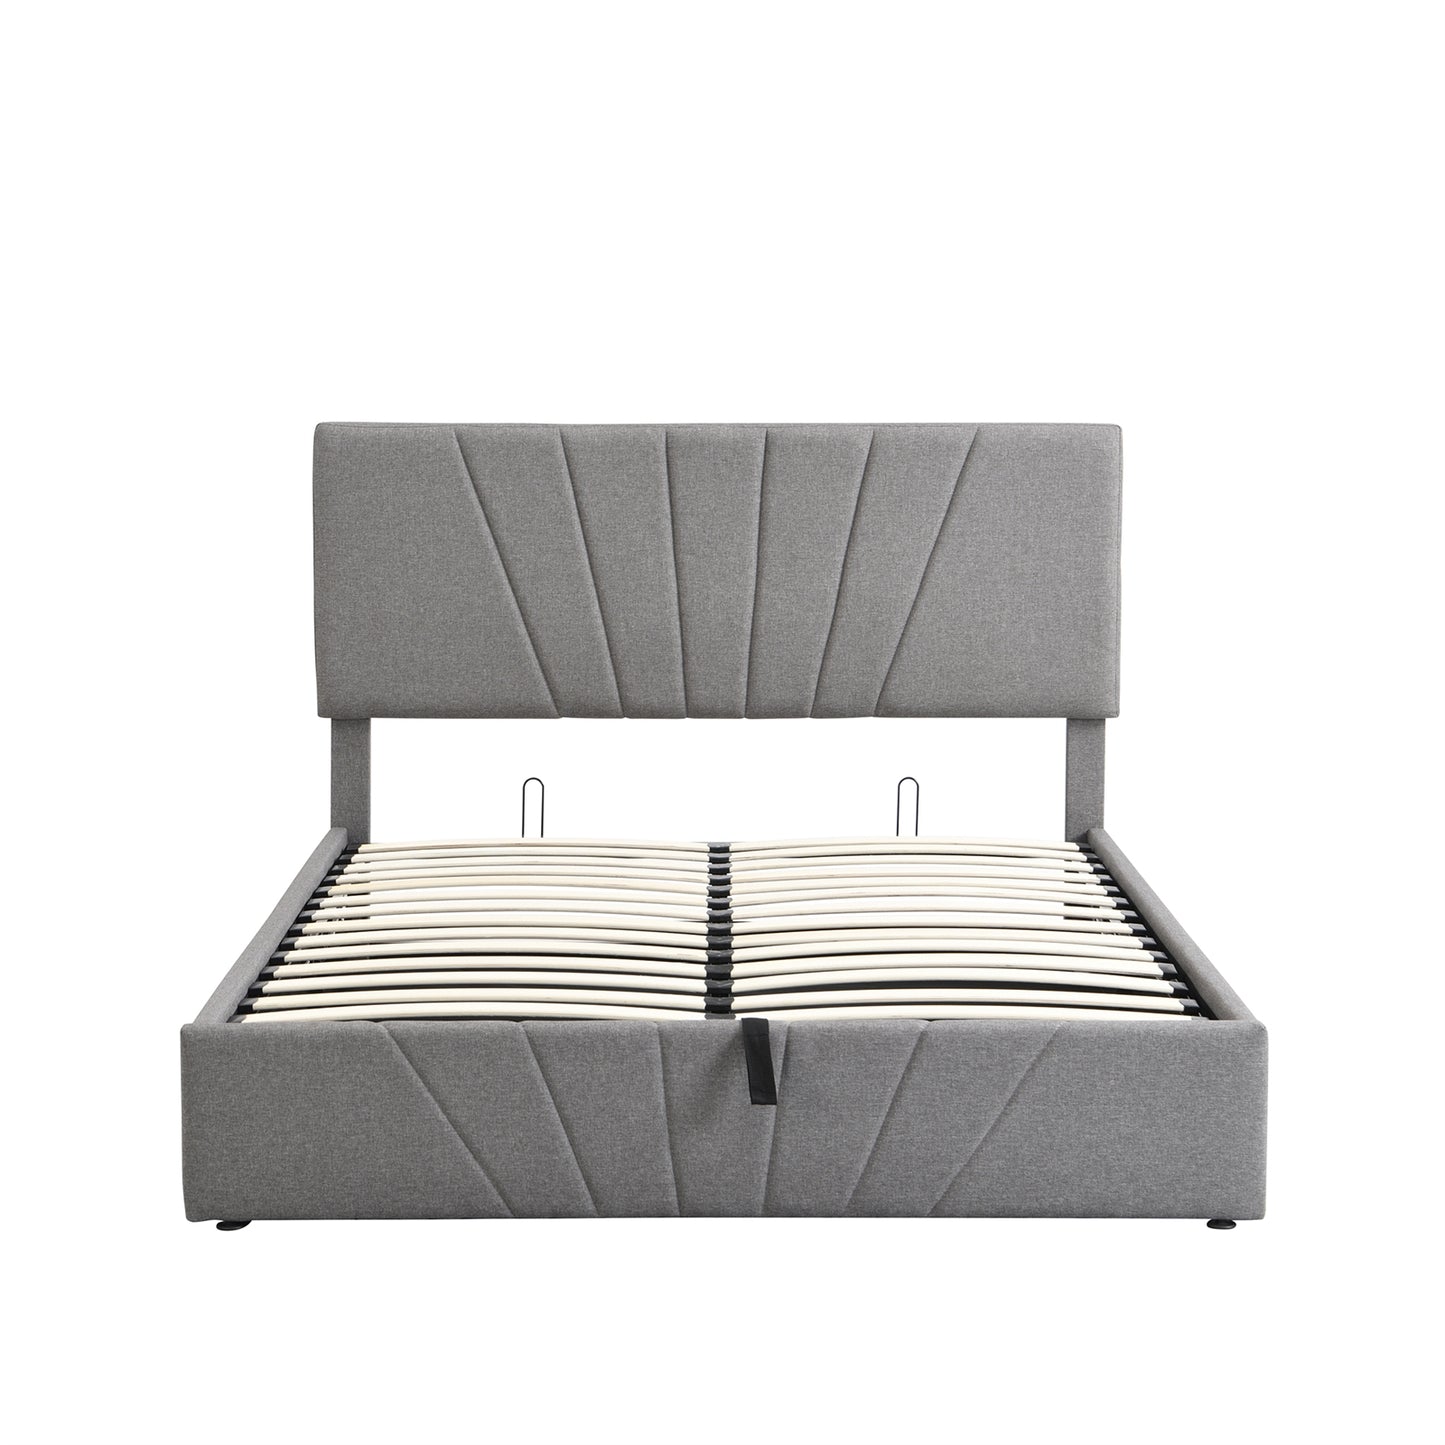 Destiny Full Size Gray Linen Platform Bed with Storage